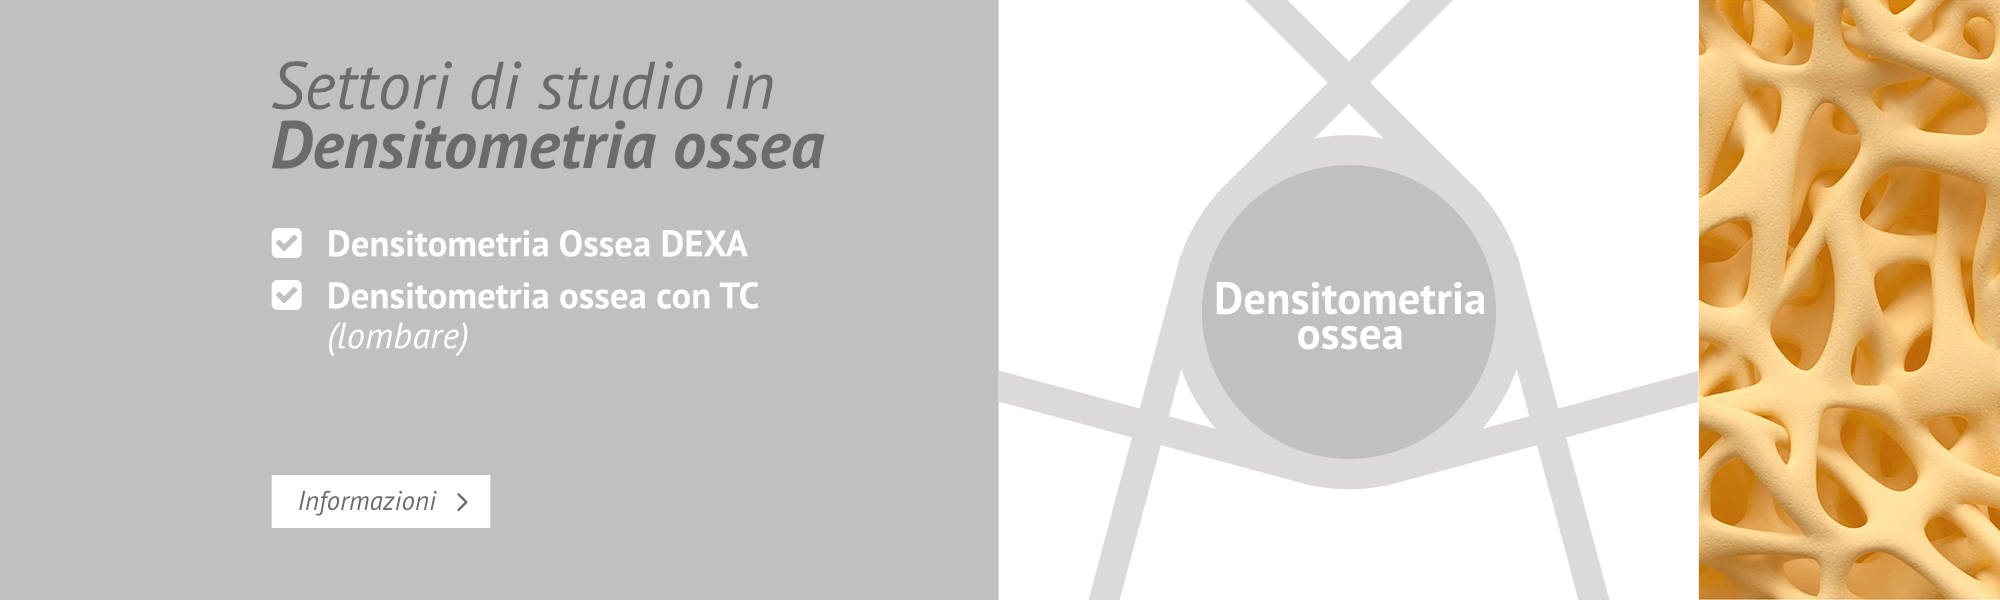 Densitometria Ossea